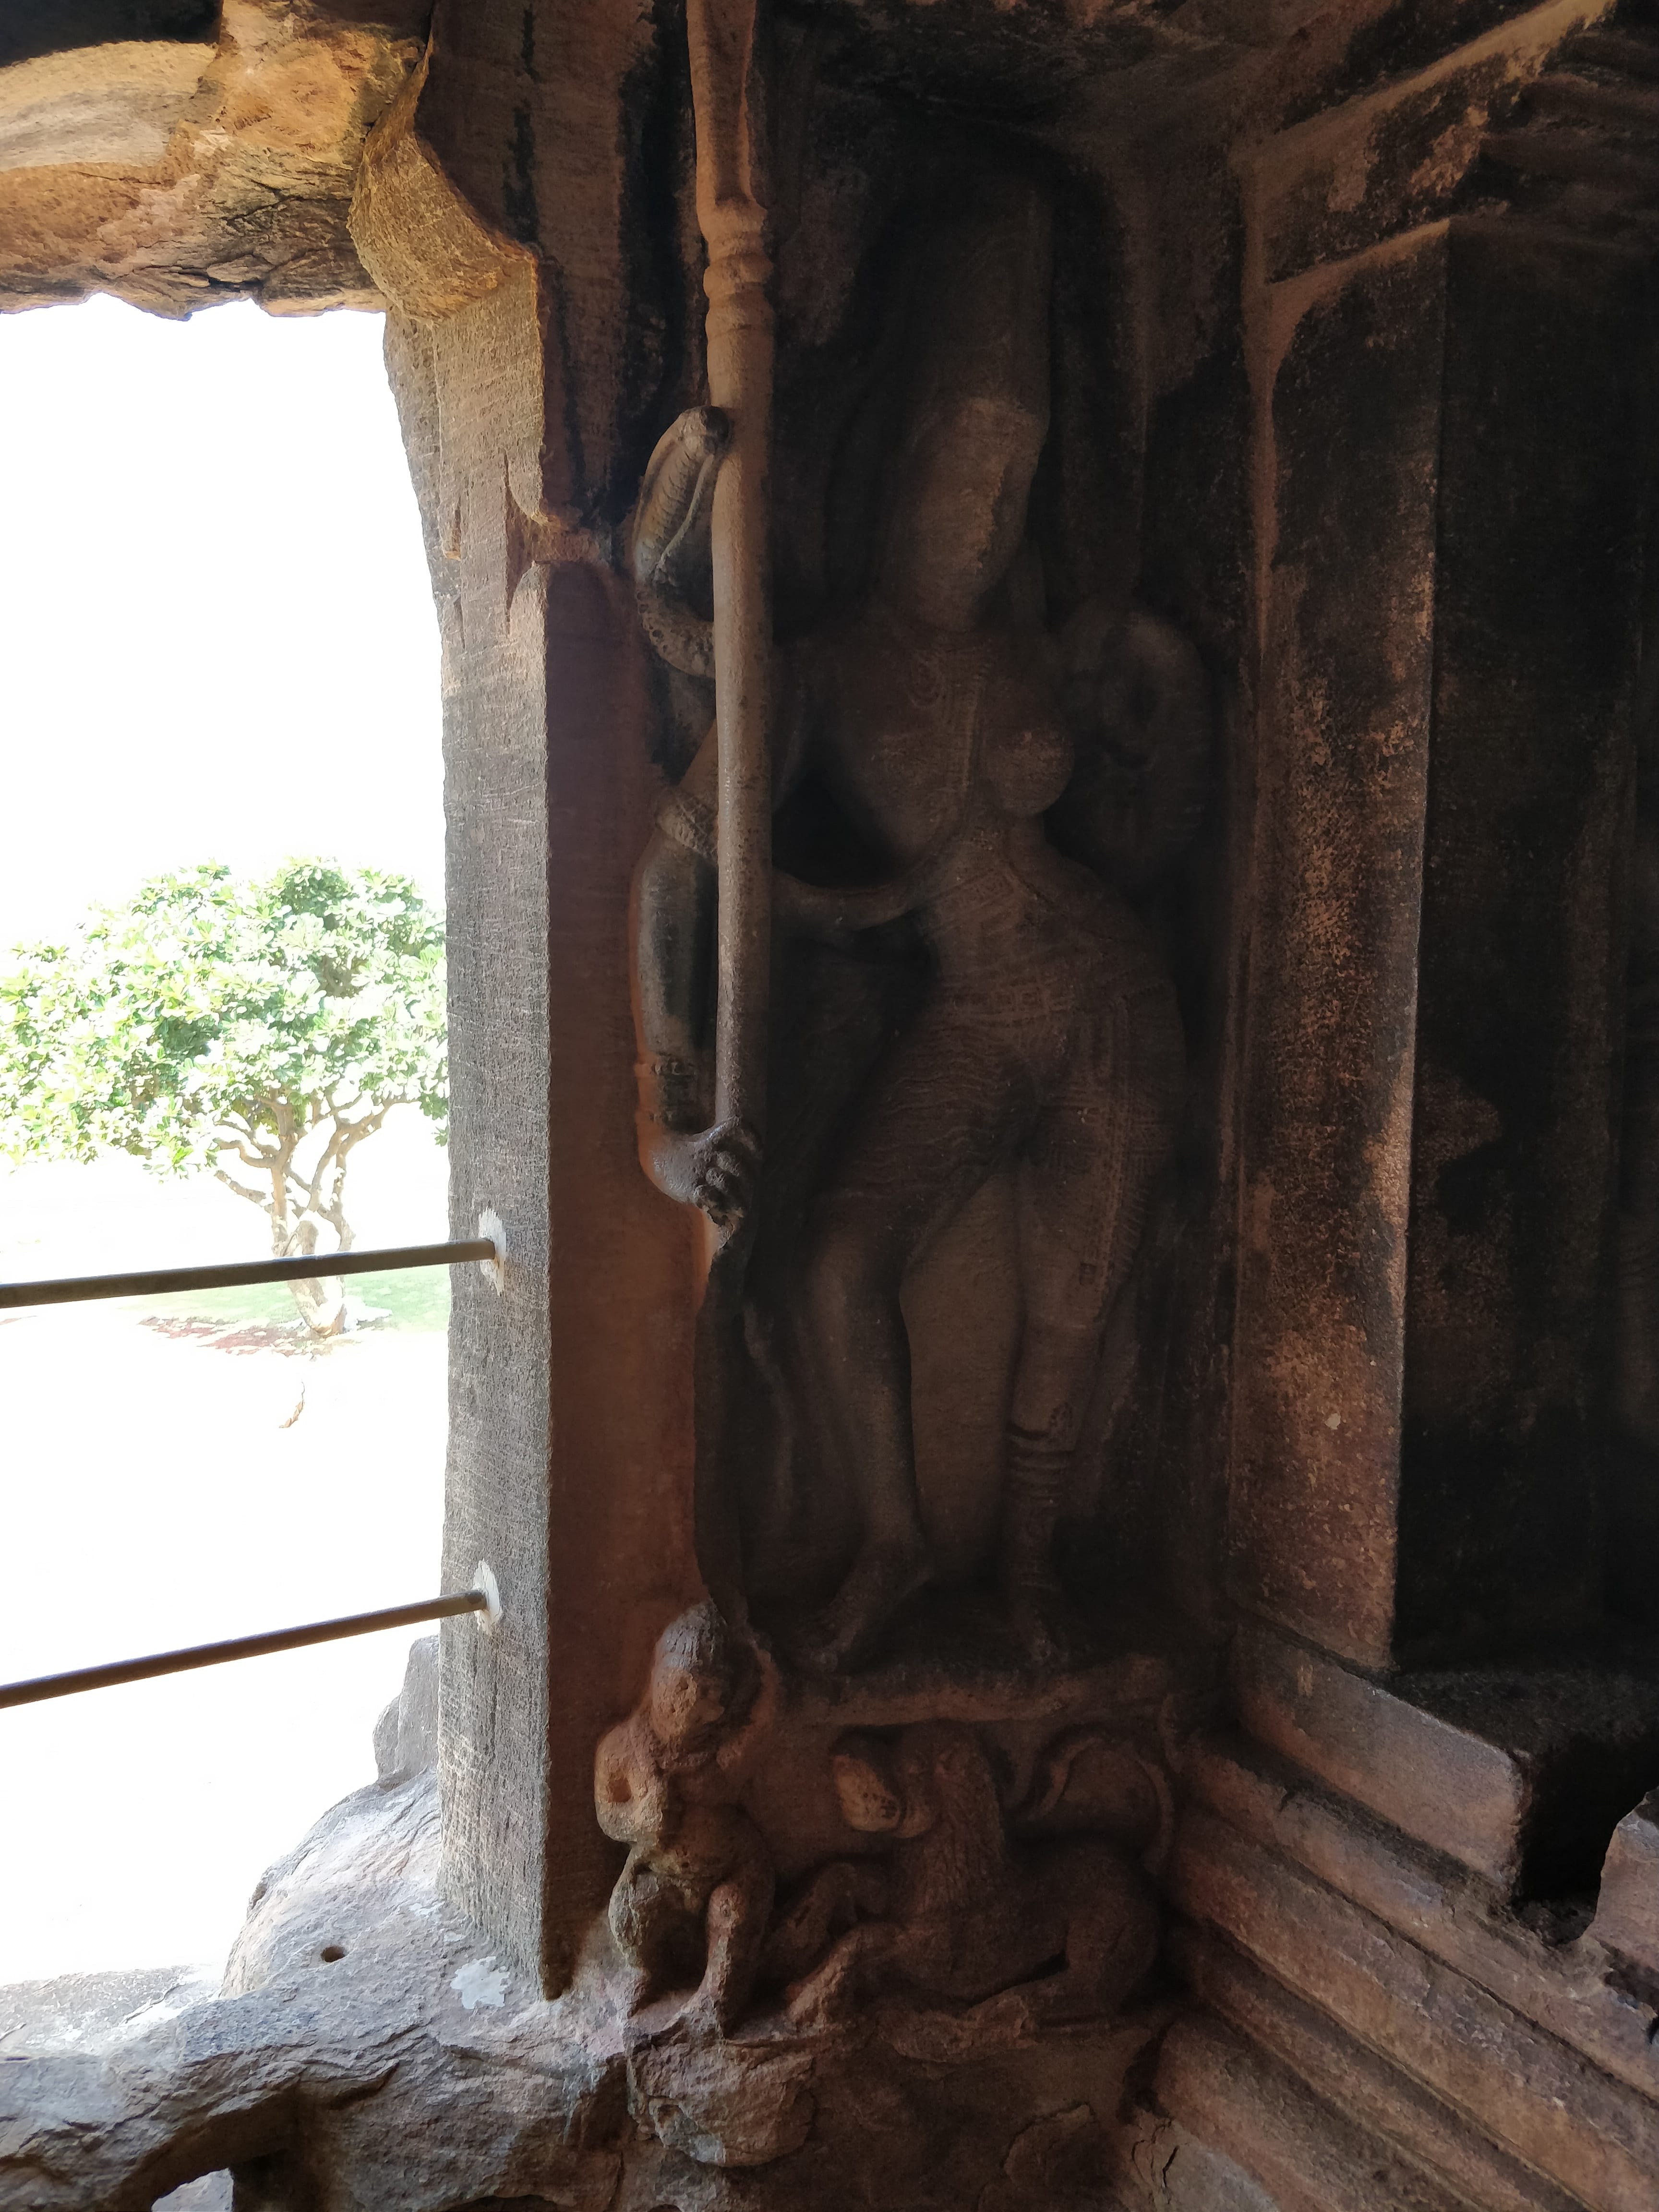 Harihara - half man - half woman at Ravanaphadi rock-cut cave temple